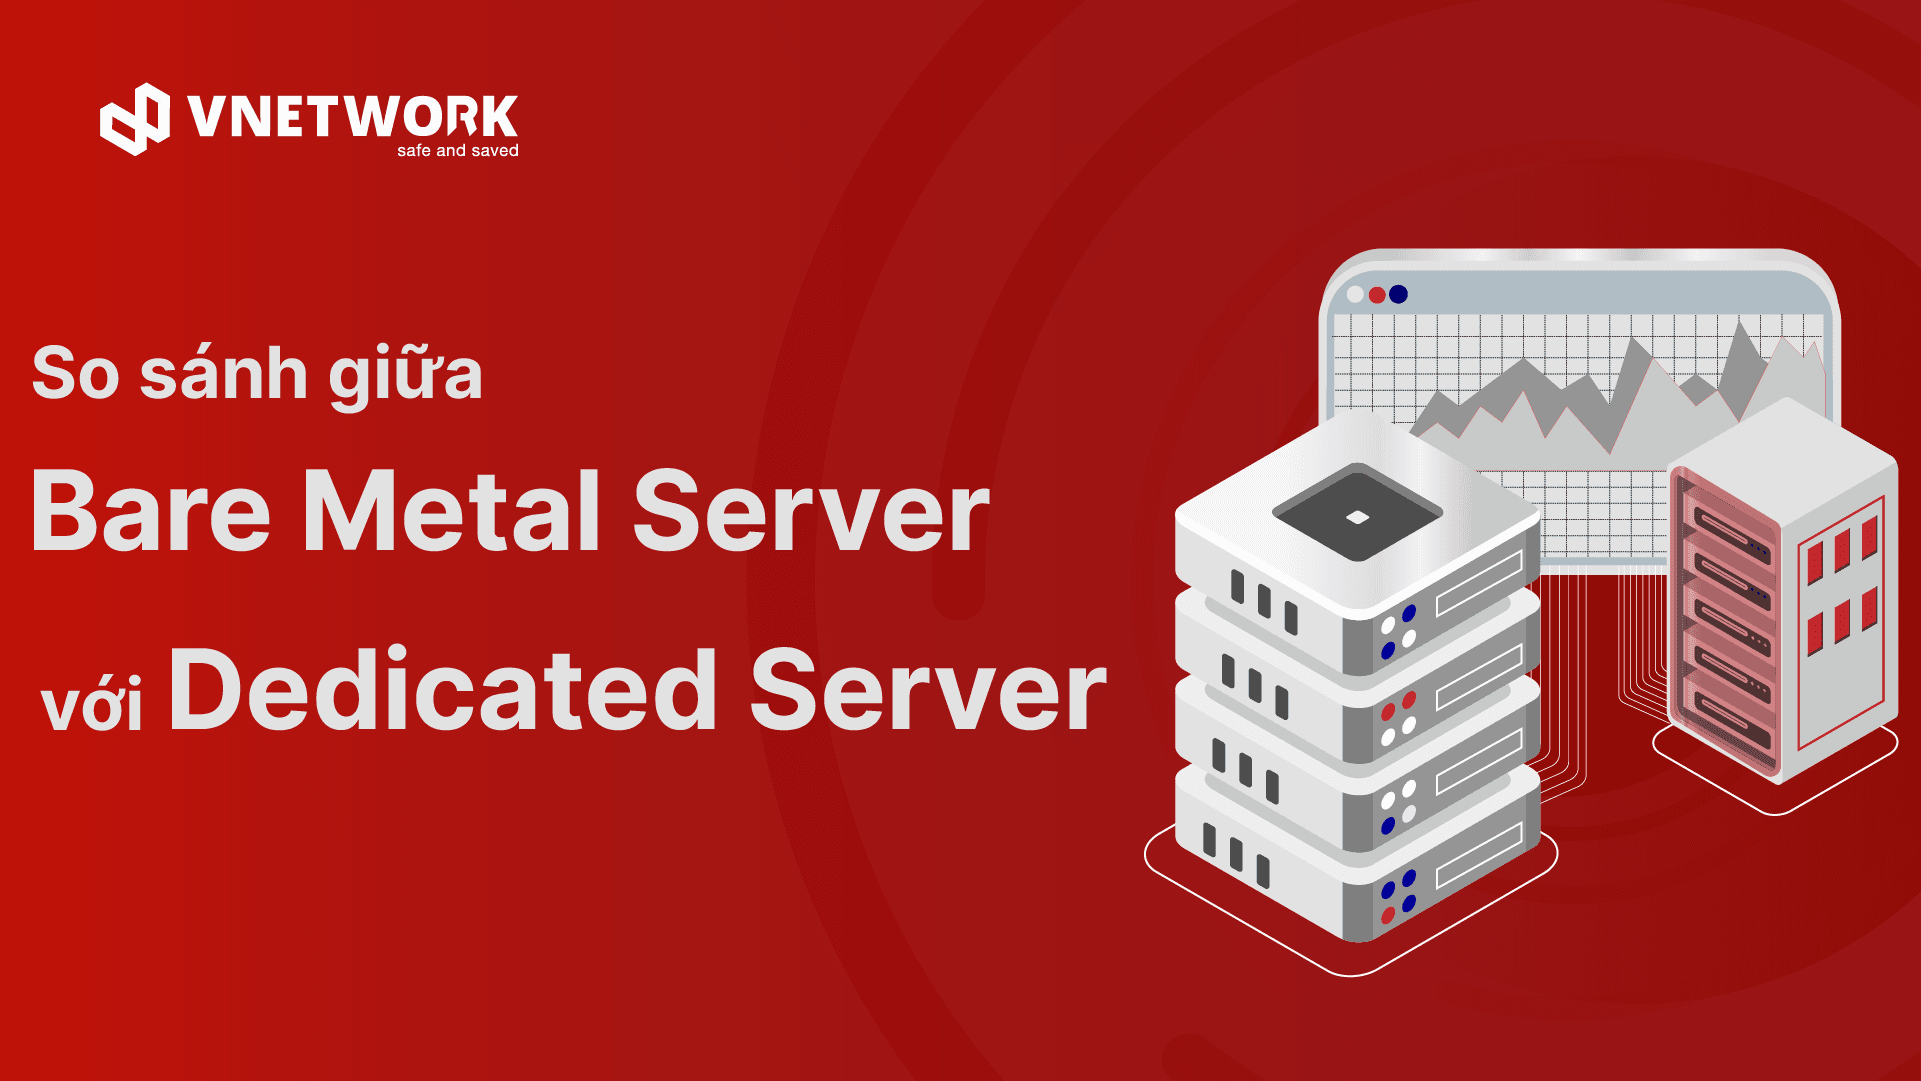 Lựa chọn máy chủ: Bare Metal Servers hay Dedicated Servers?